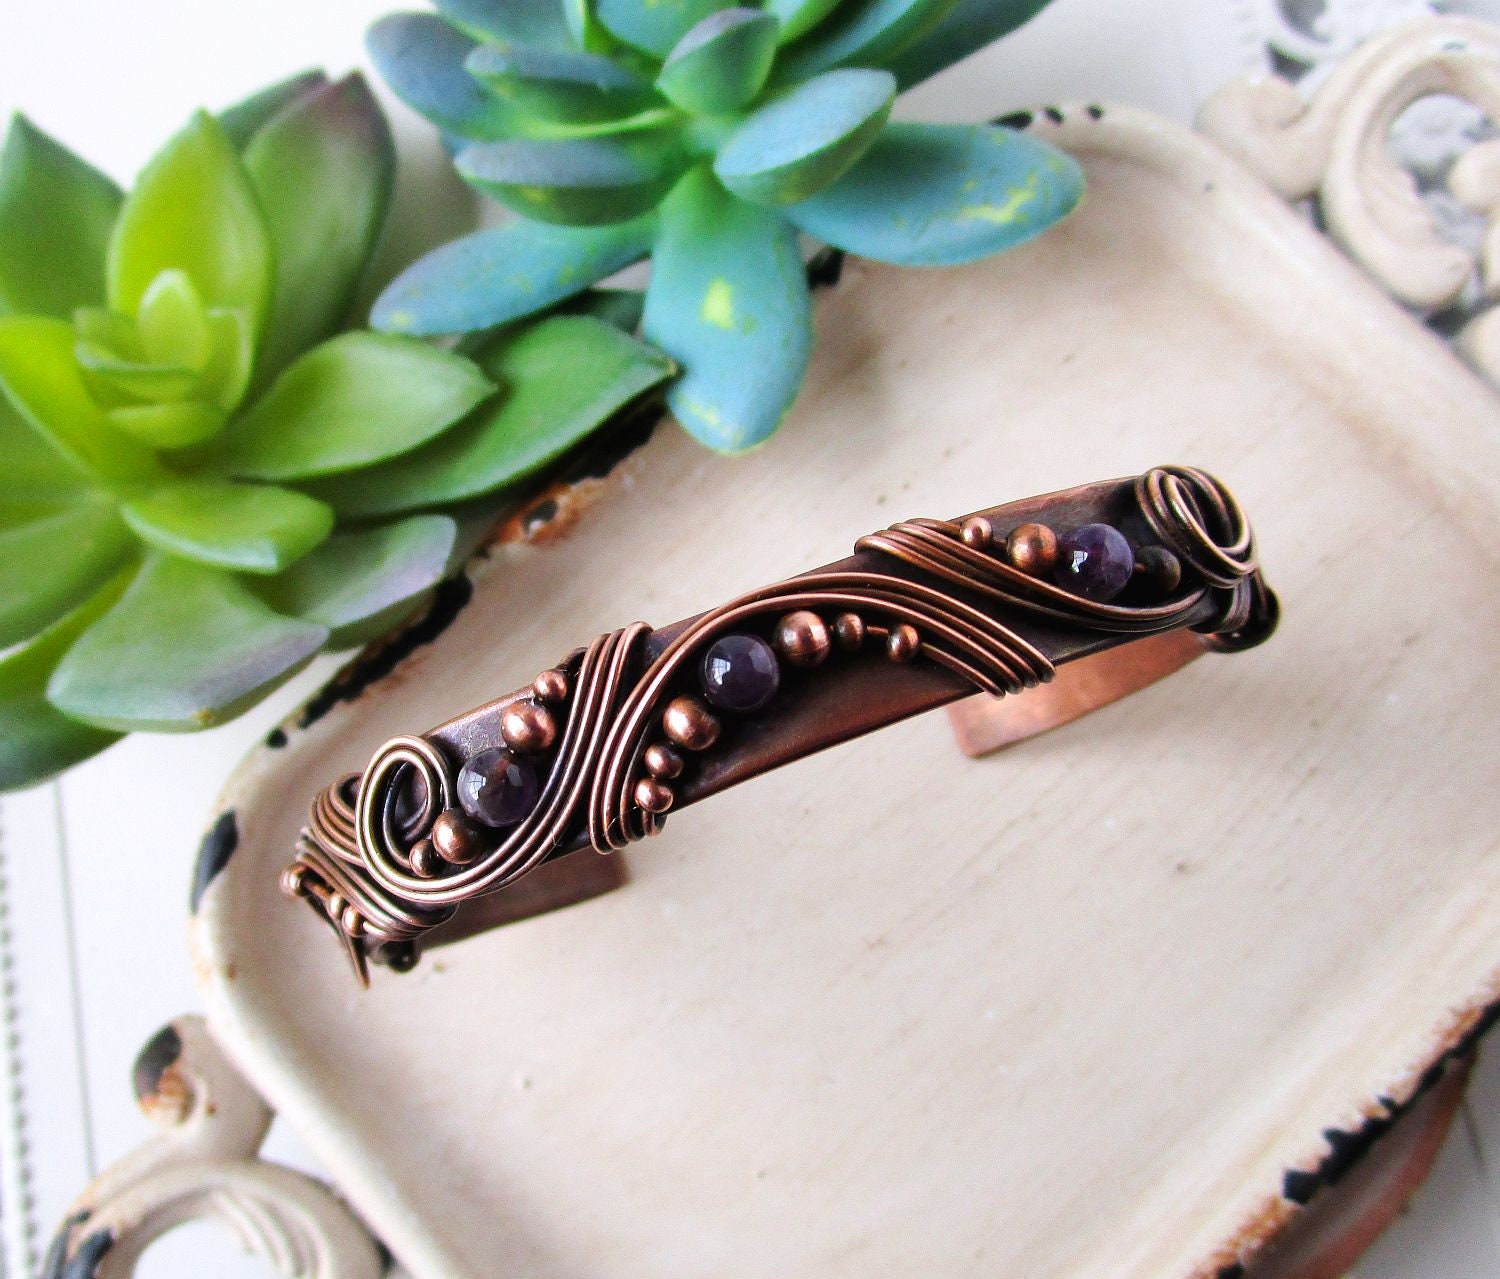 Copper Beaded Bracelet Easy Wear Elastic Stretch Bracelet Solid Copper –  Celtic Copper Shop